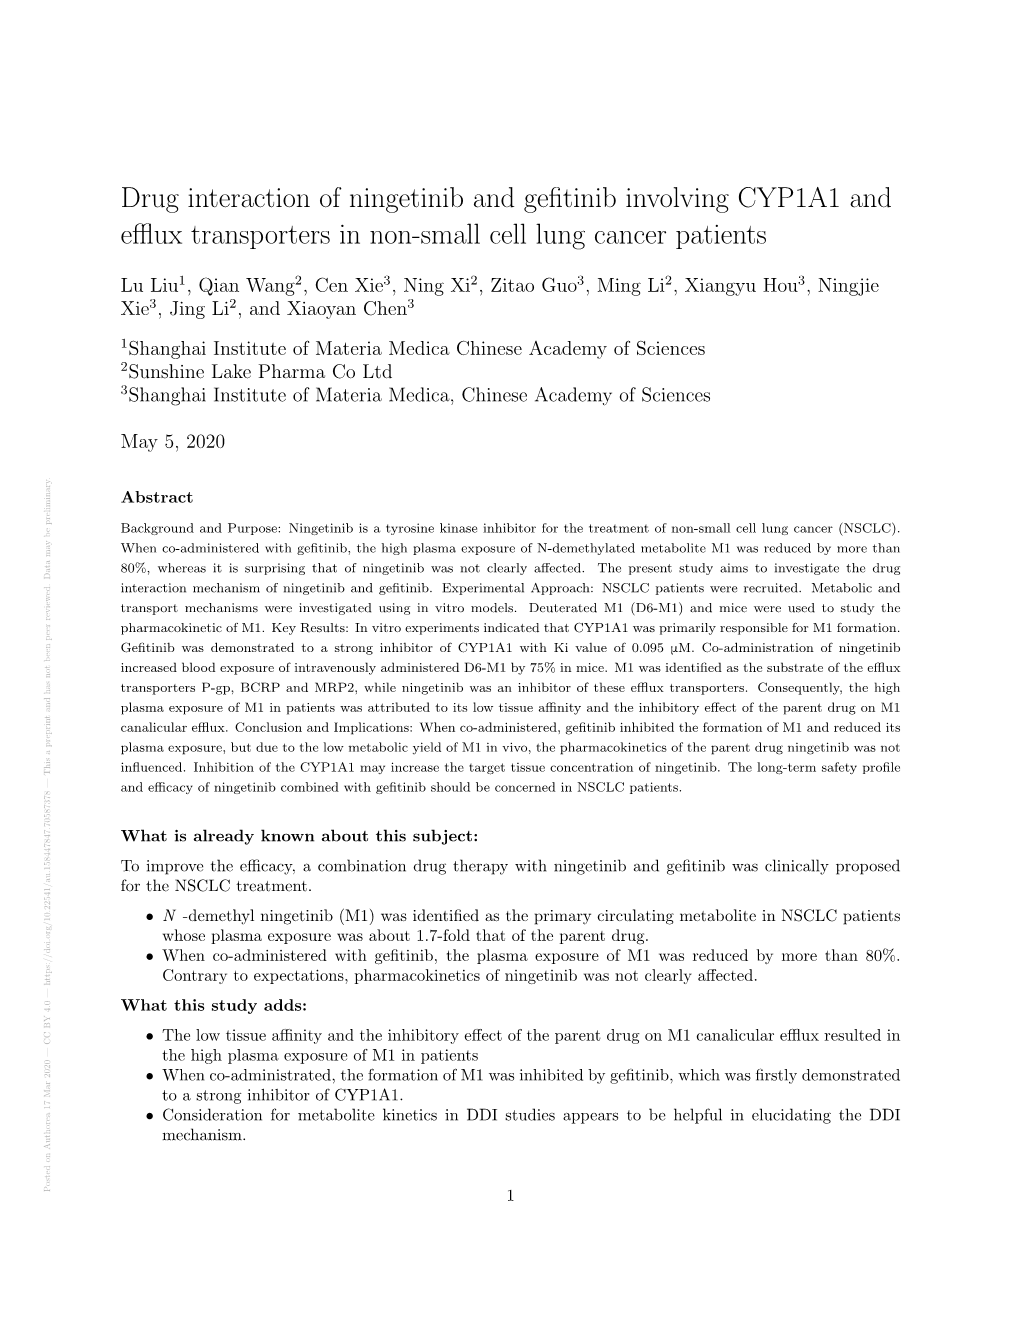 Drug Interaction of Ningetinib and Gefitinib Involving CYP1A1 And